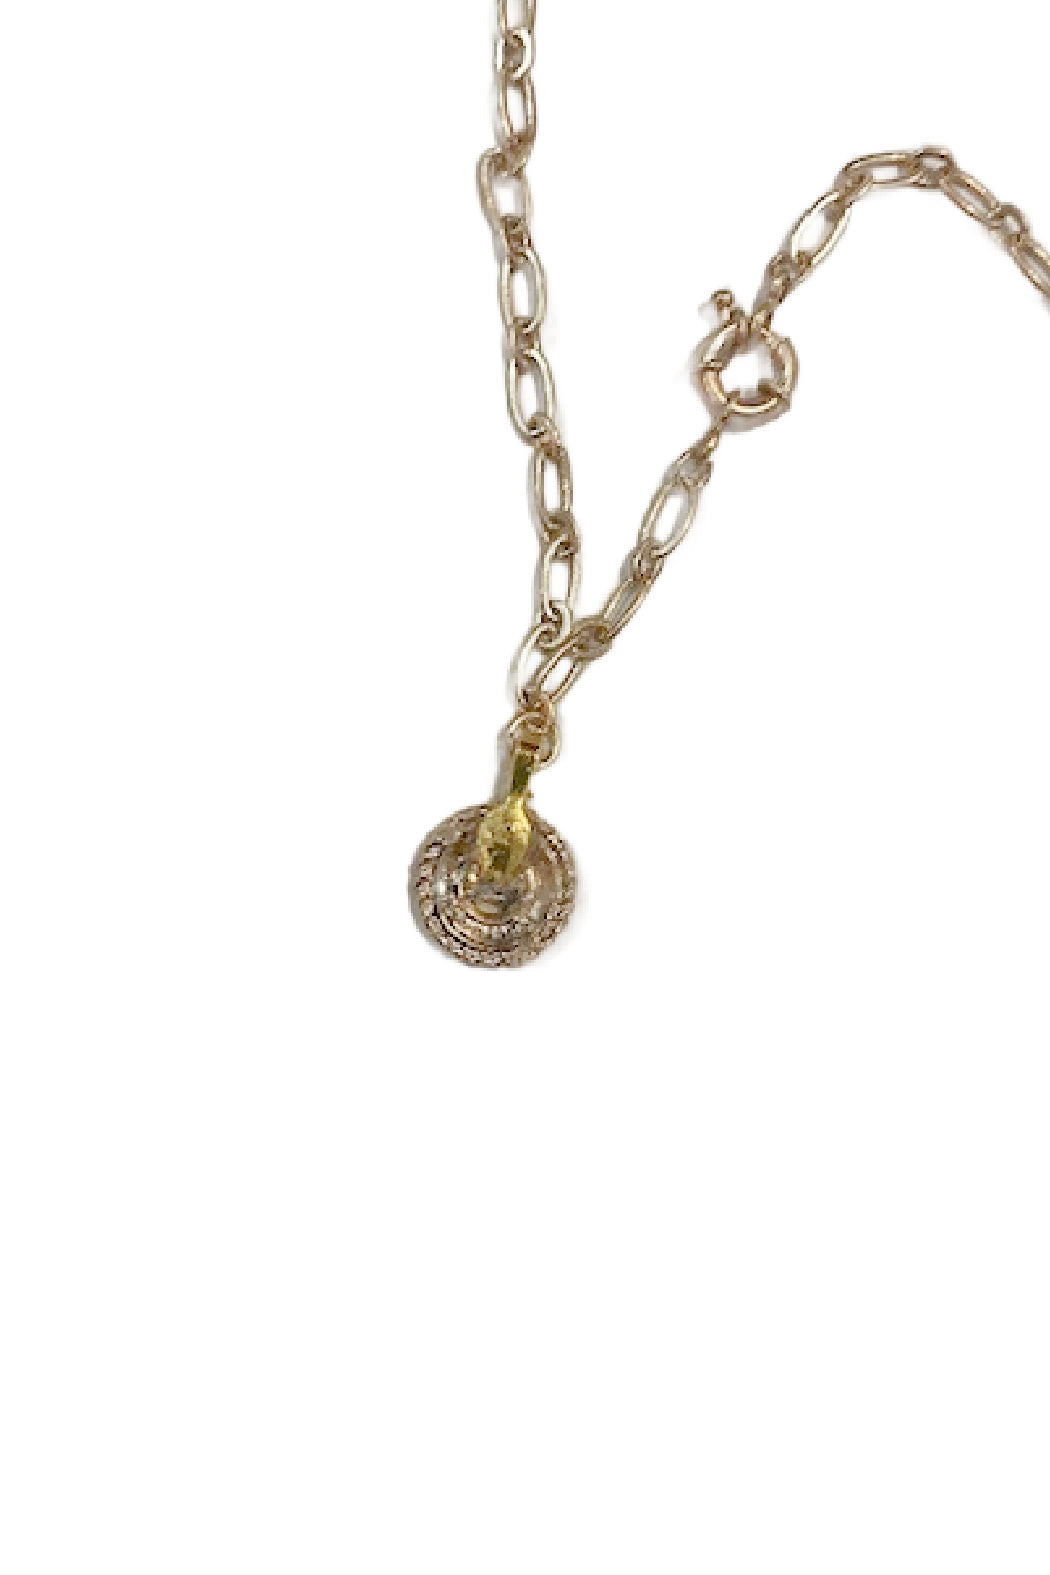 Aqua Chanel Button Necklace